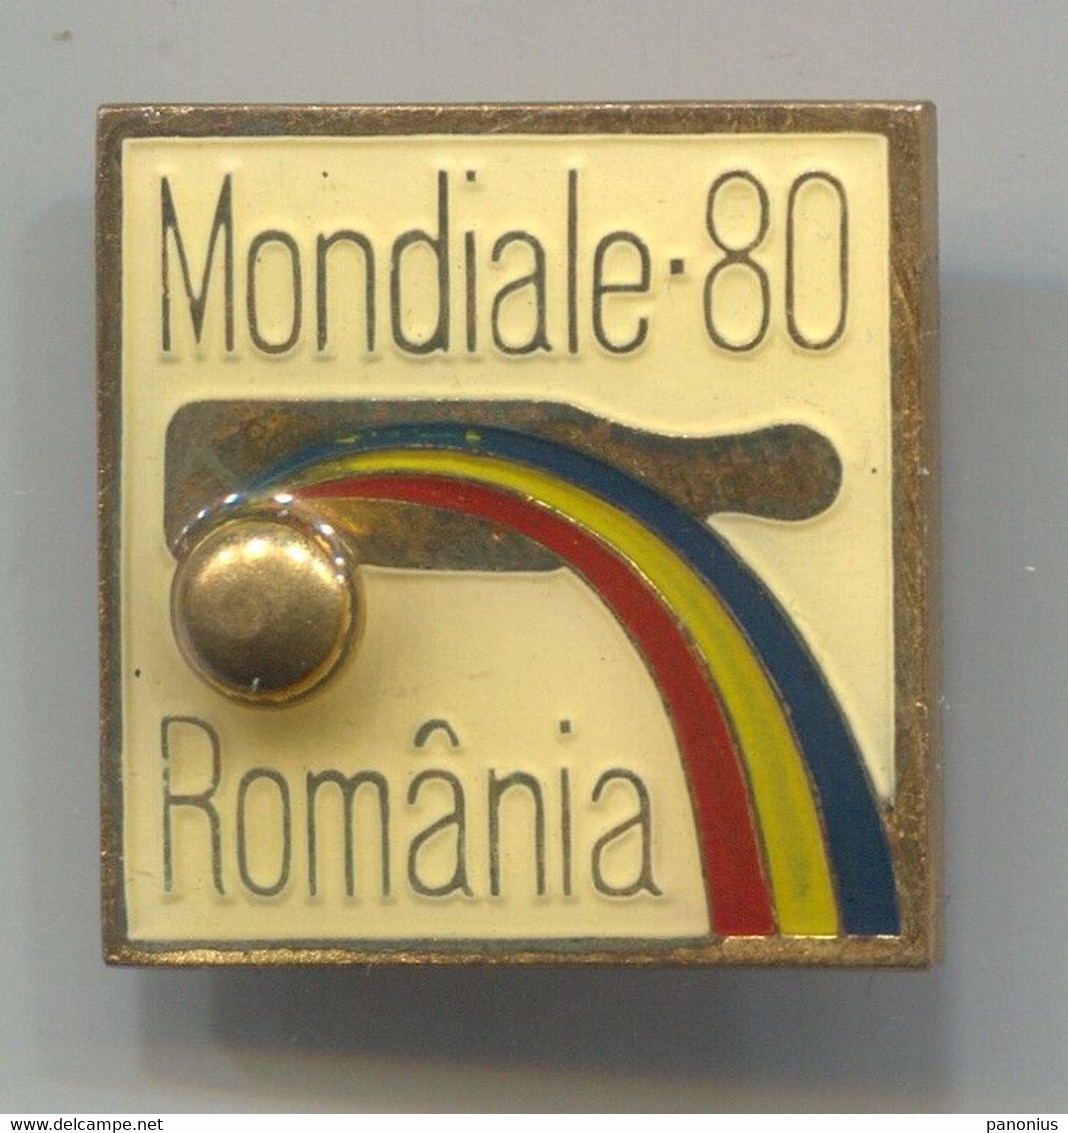 1980. World Bowling Championship Romania, Vintage Pin, Badge, Abzeichen - Bowling